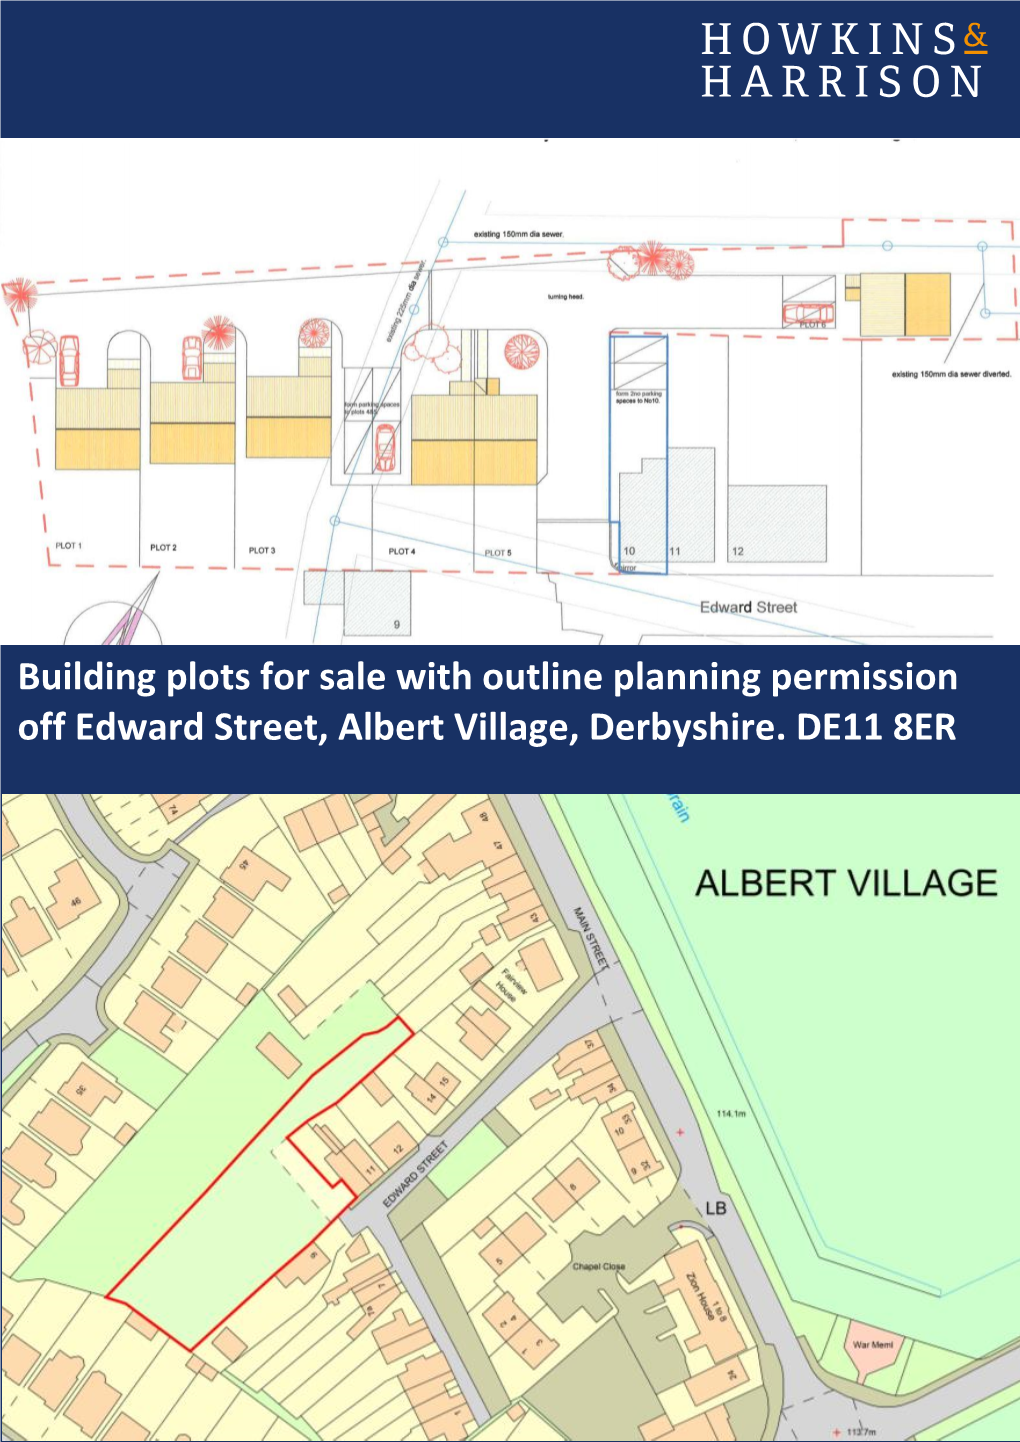 Building Plots for Sale with Outline Planning Permission Off Edward Street, Albert Village, Derbyshire